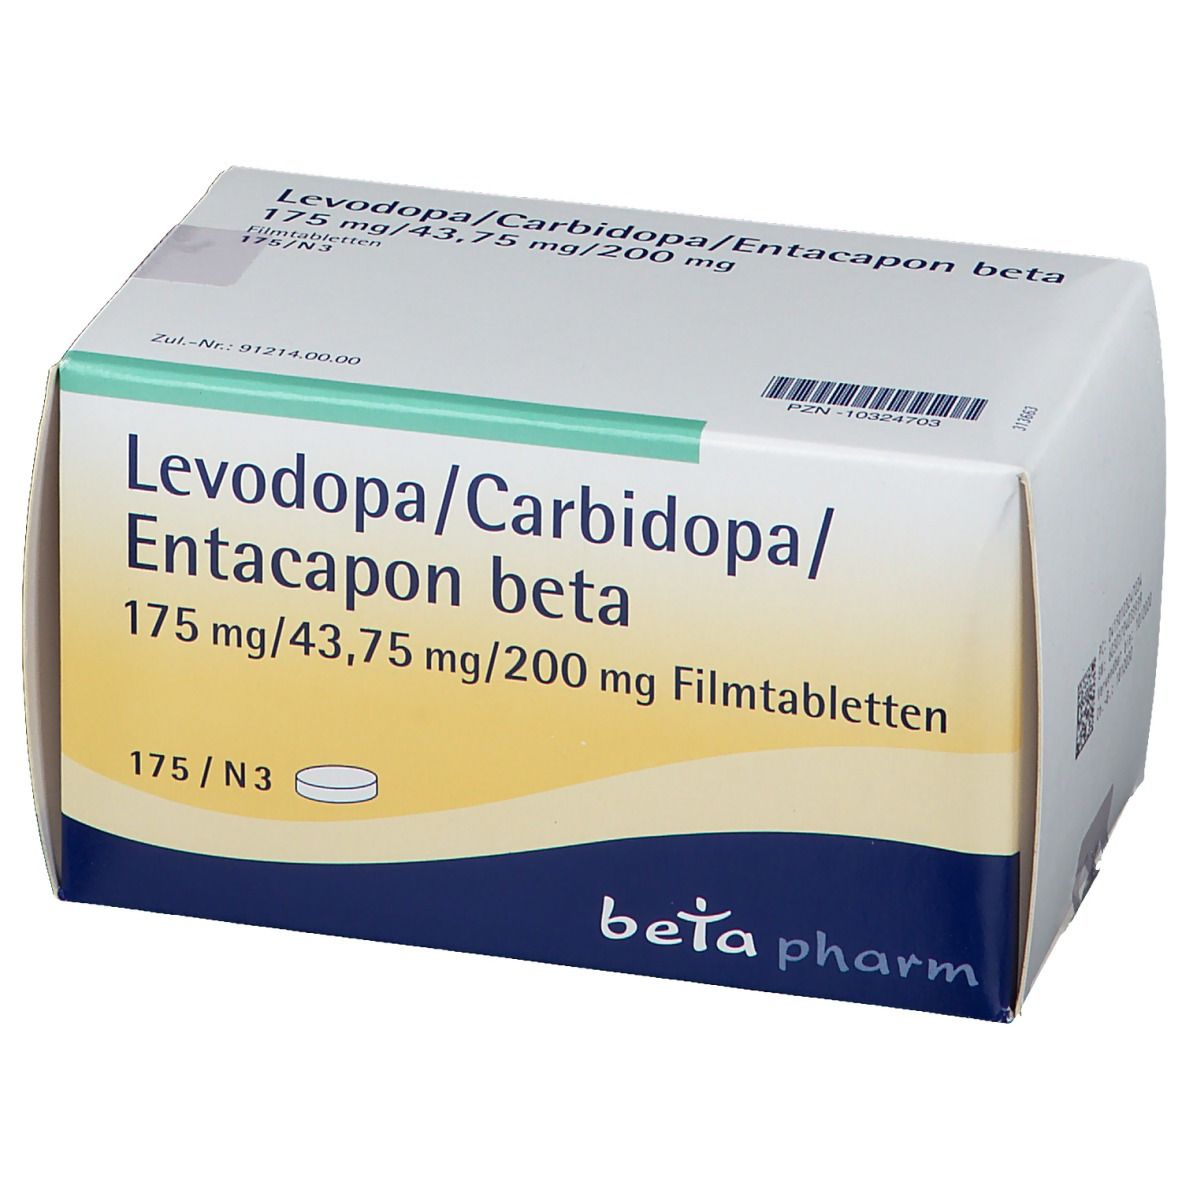 Levodopa/Carbidopa/Entacapon beta 175 mg/43,75 mg/200 mg